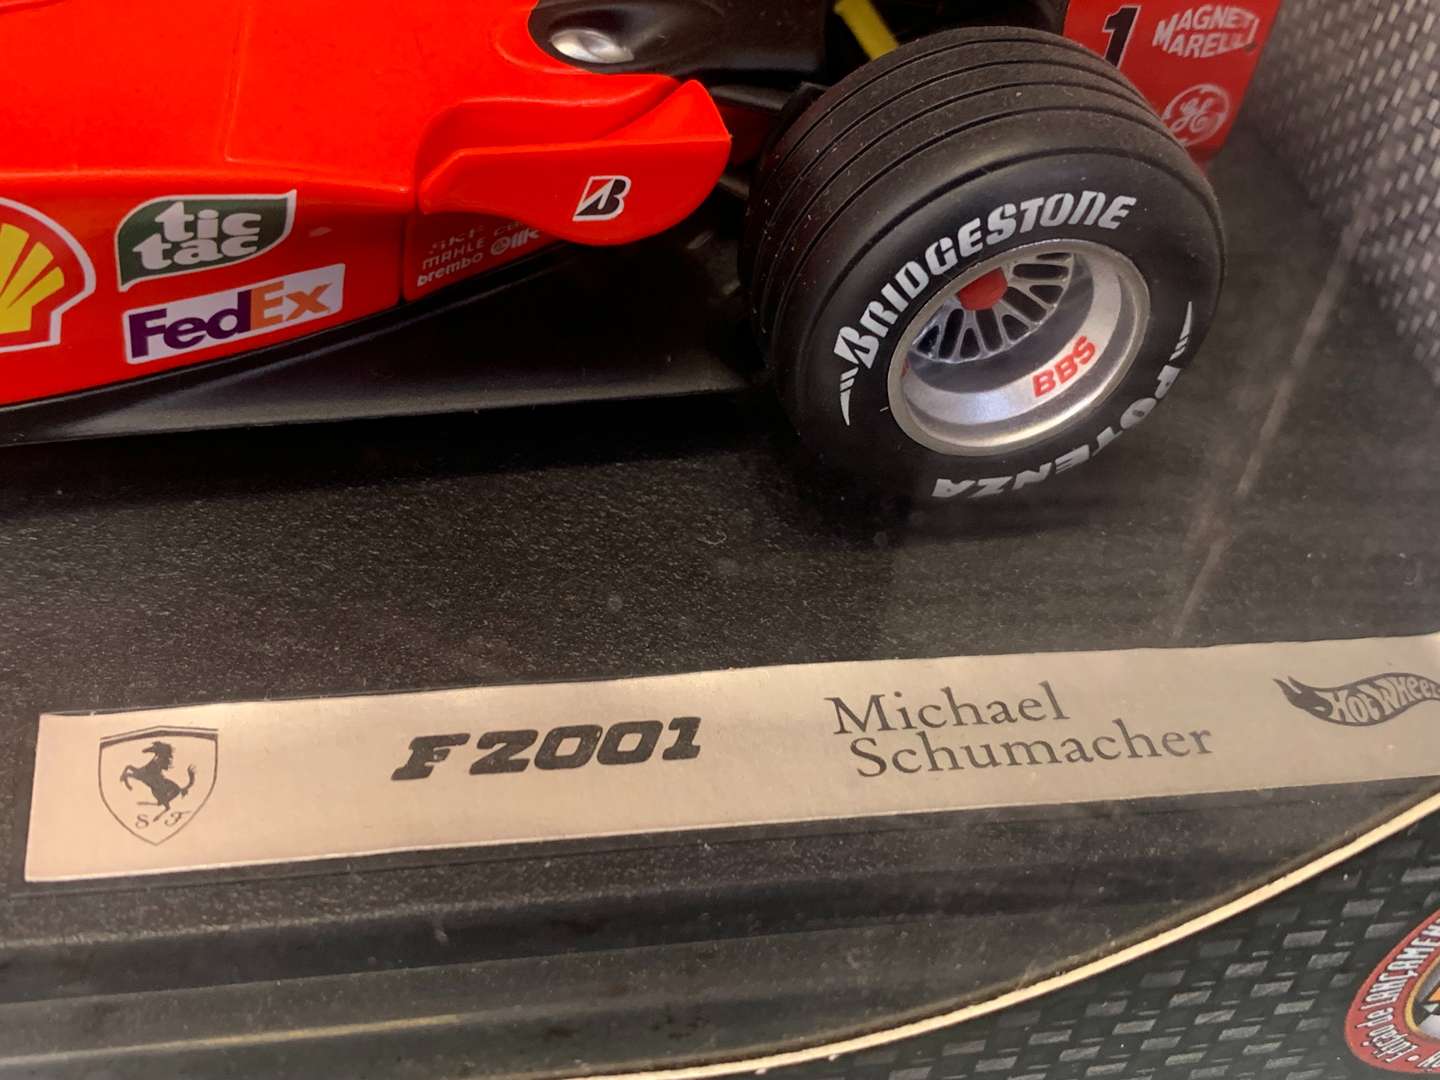 <p>Boxed Hotwheels F2001 Michael Schumacher F1 Car 1:18 Scale</p>